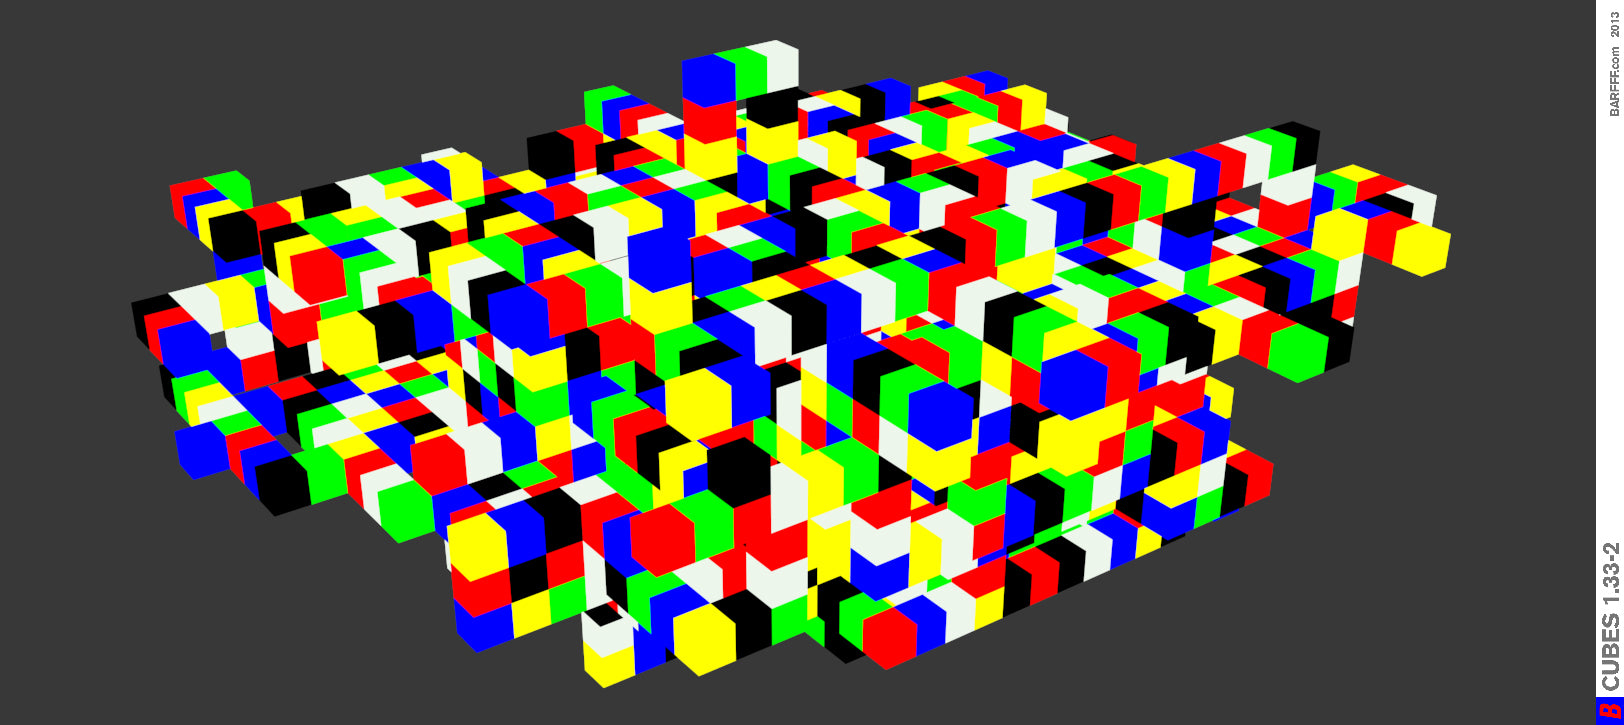 cubes 33-02 - print